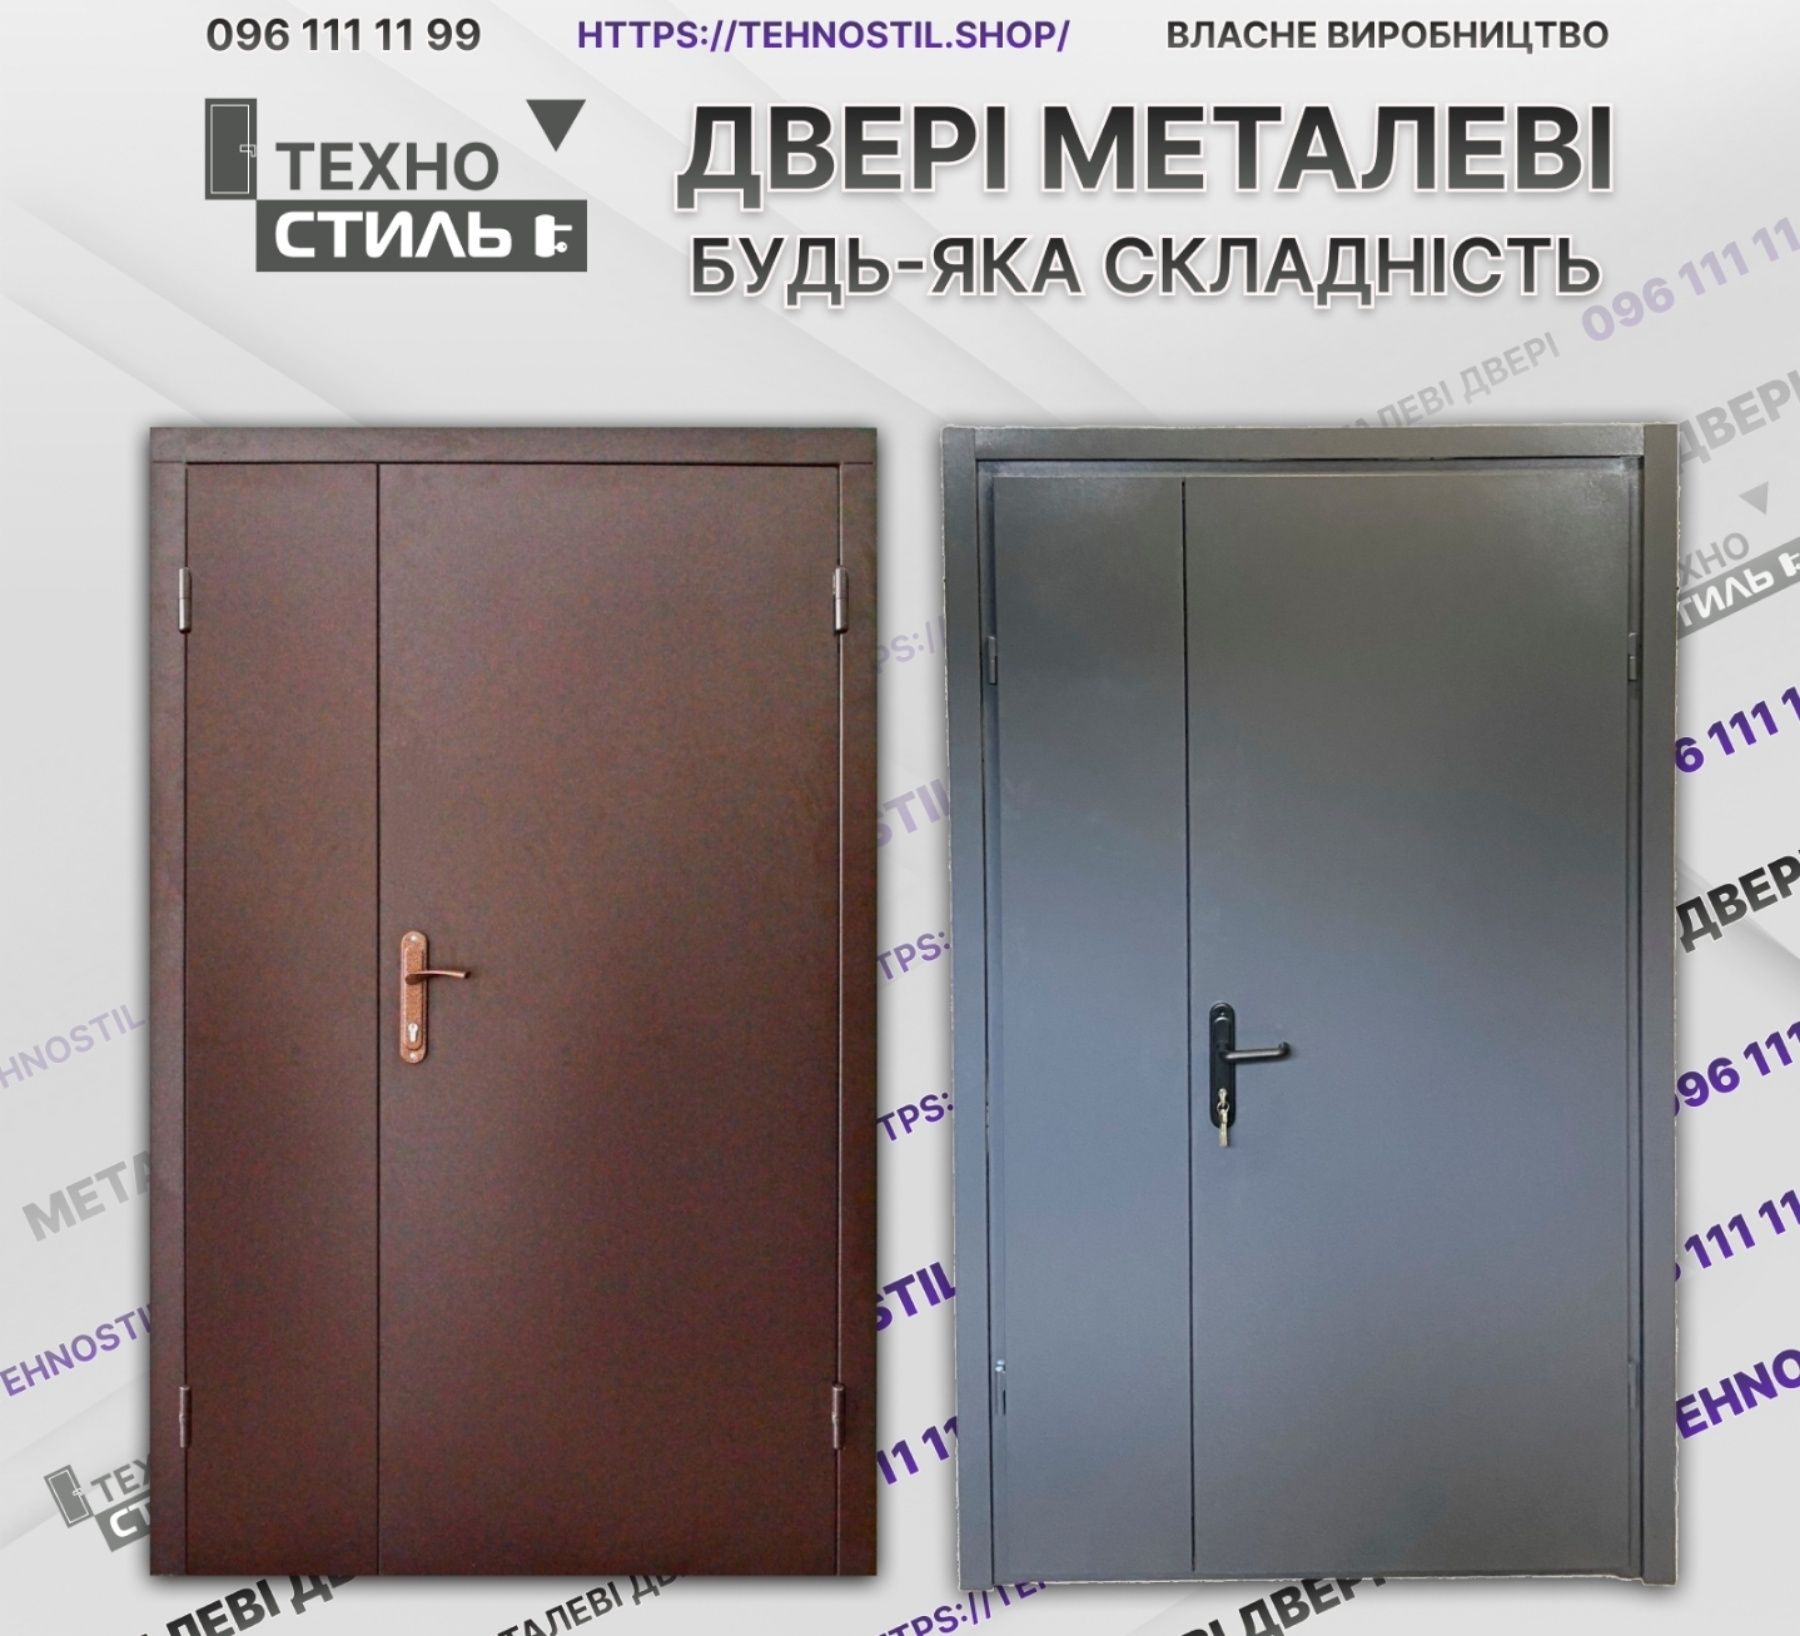 Двери металлические в хозблок гараж. Технические двери/ Металл+ДСП